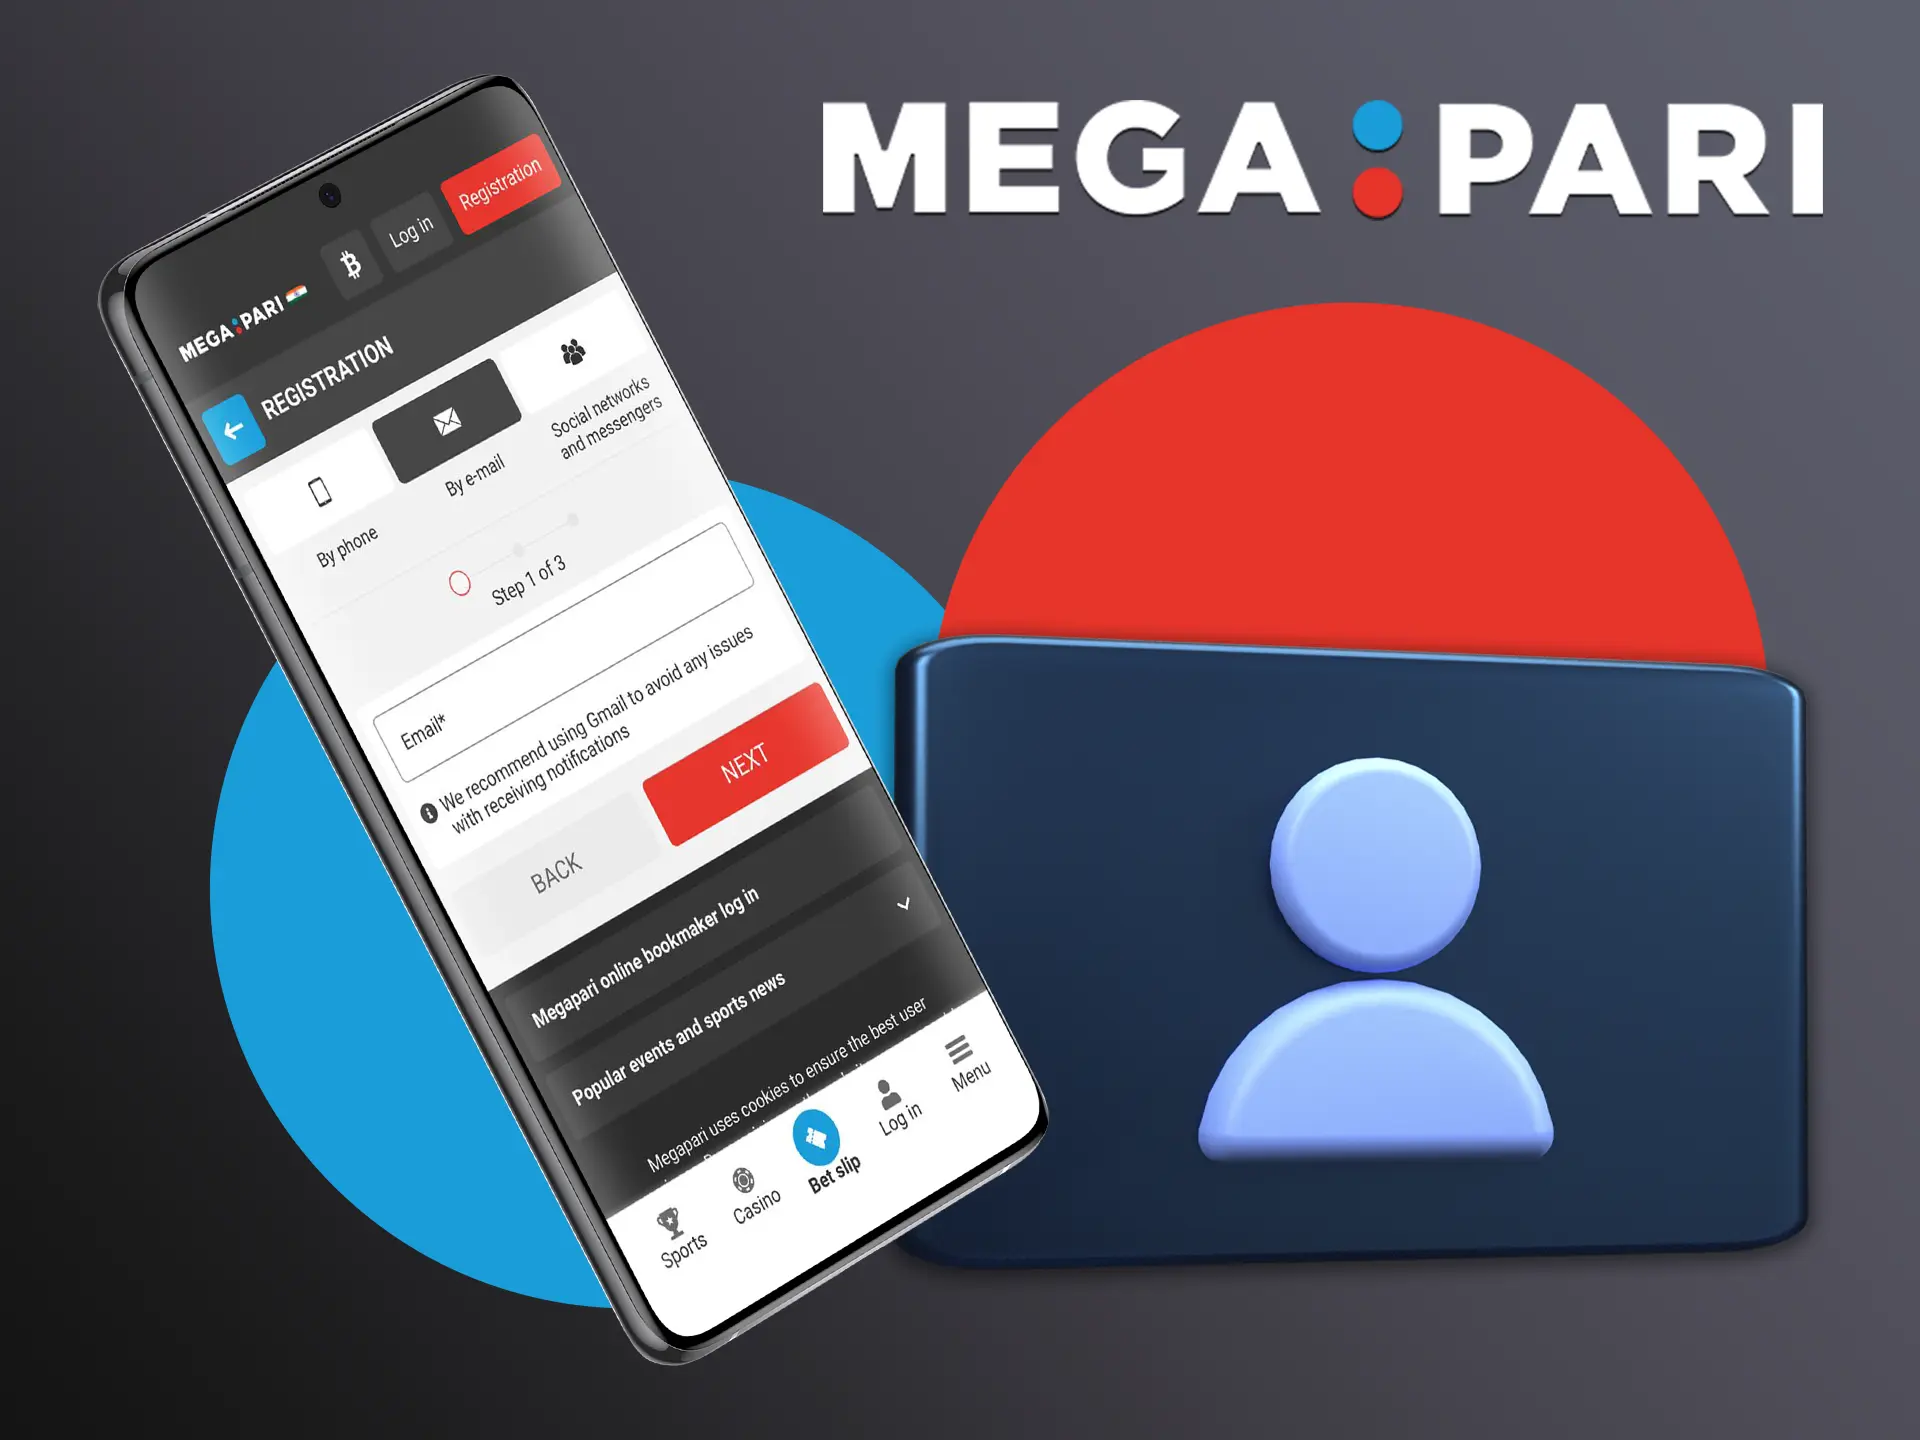 You can register at Megapari via mobile app.